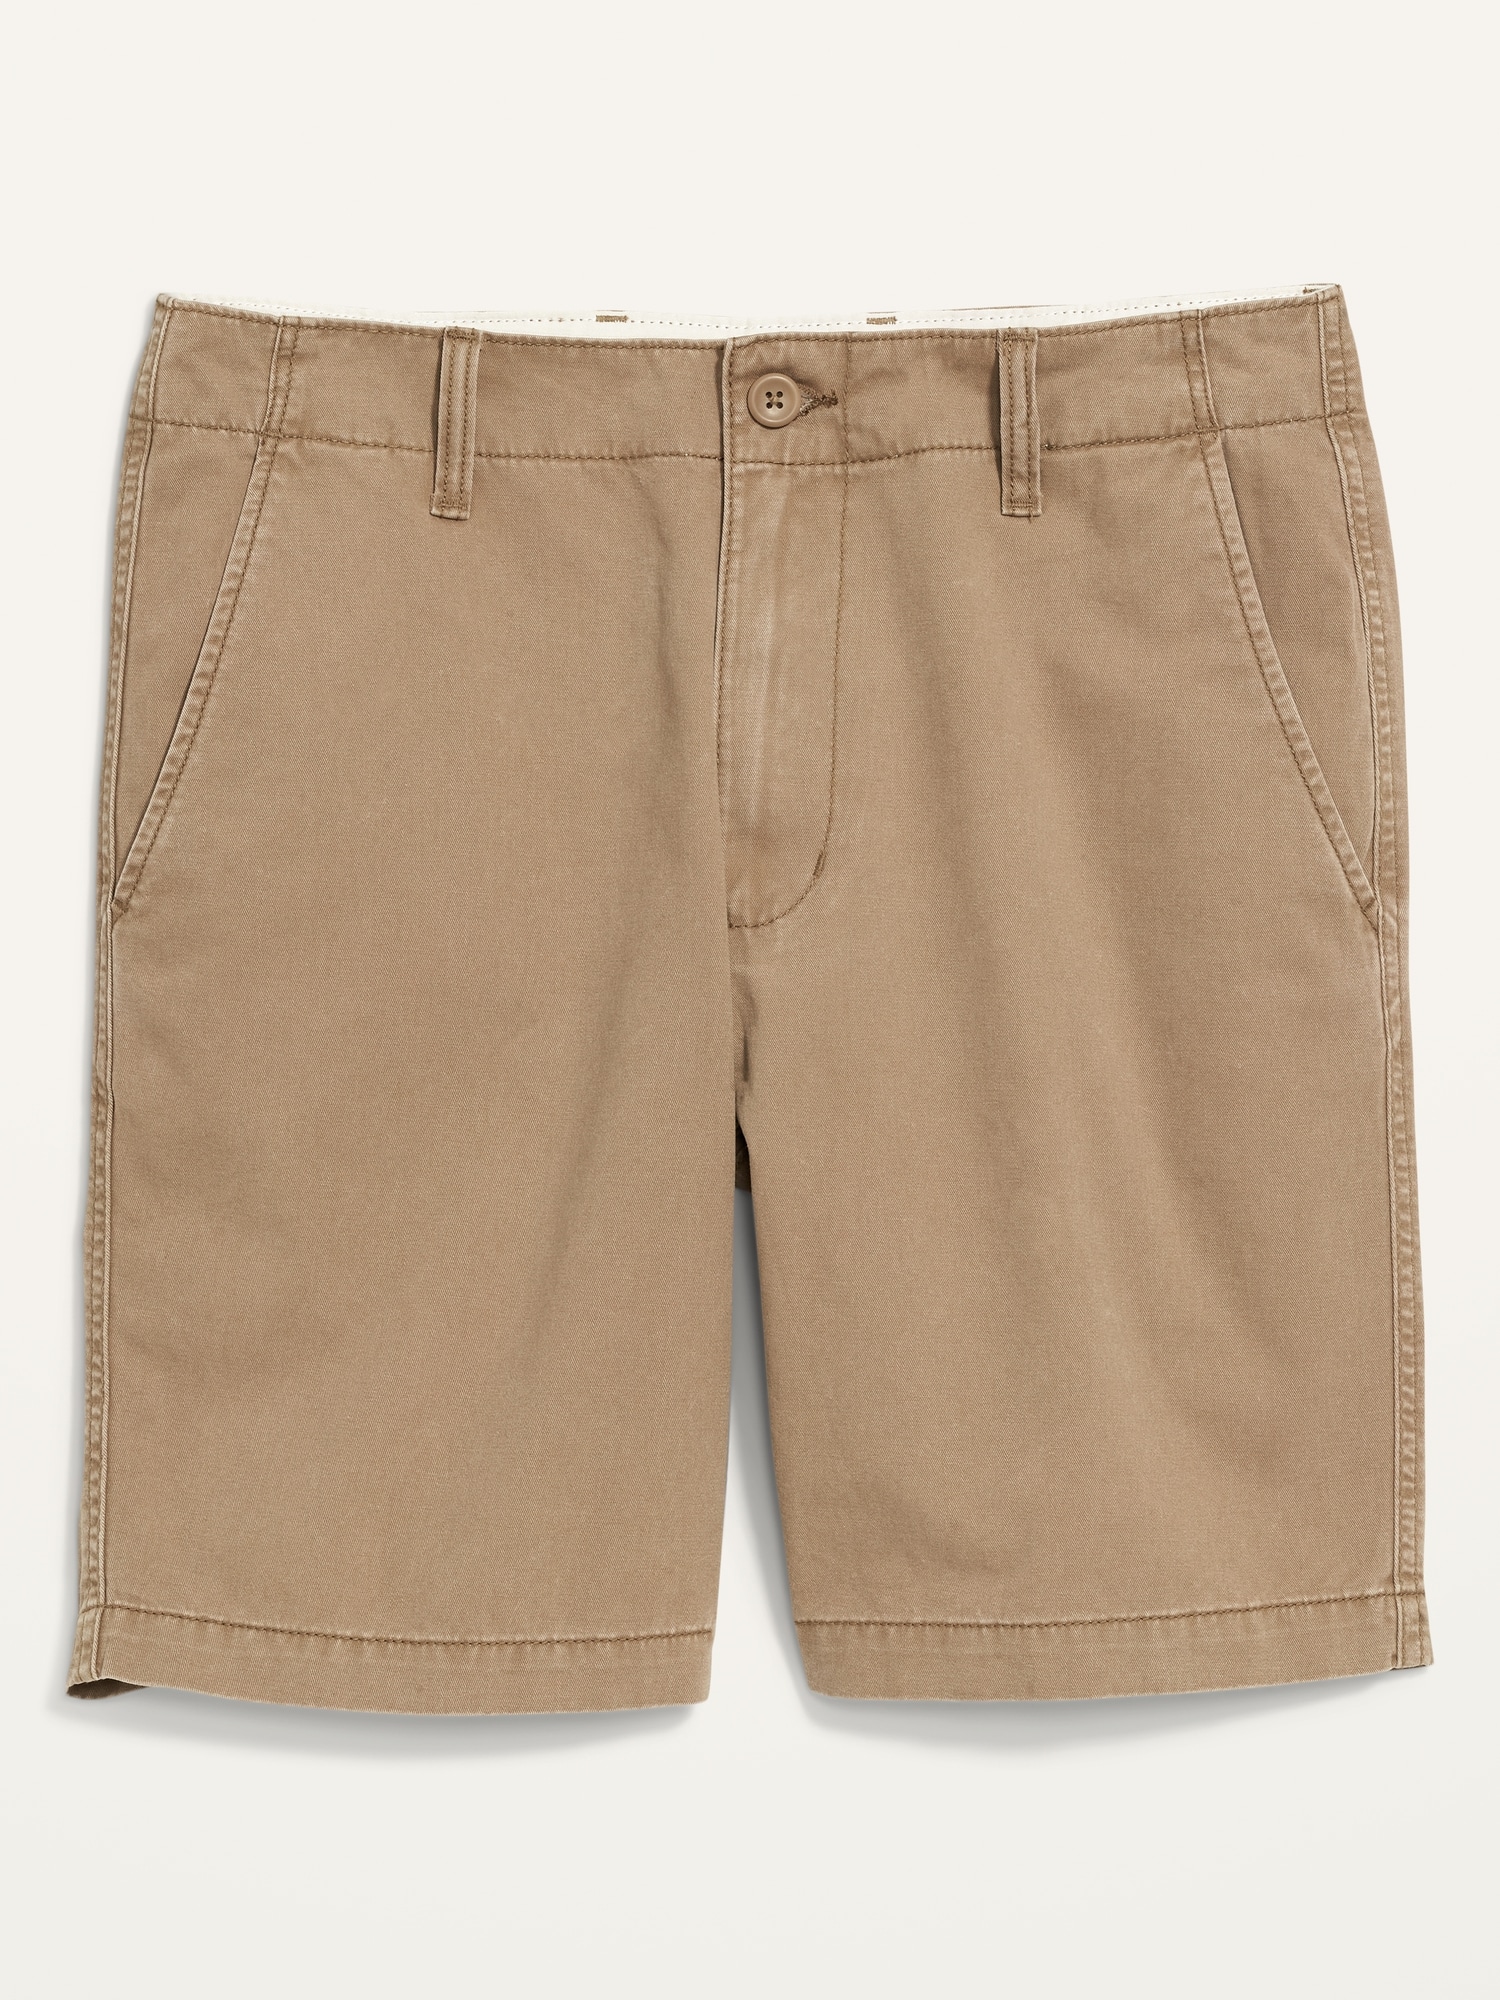 Straight Lived-In Khaki Non-Stretch Shorts - 9-inch inseam